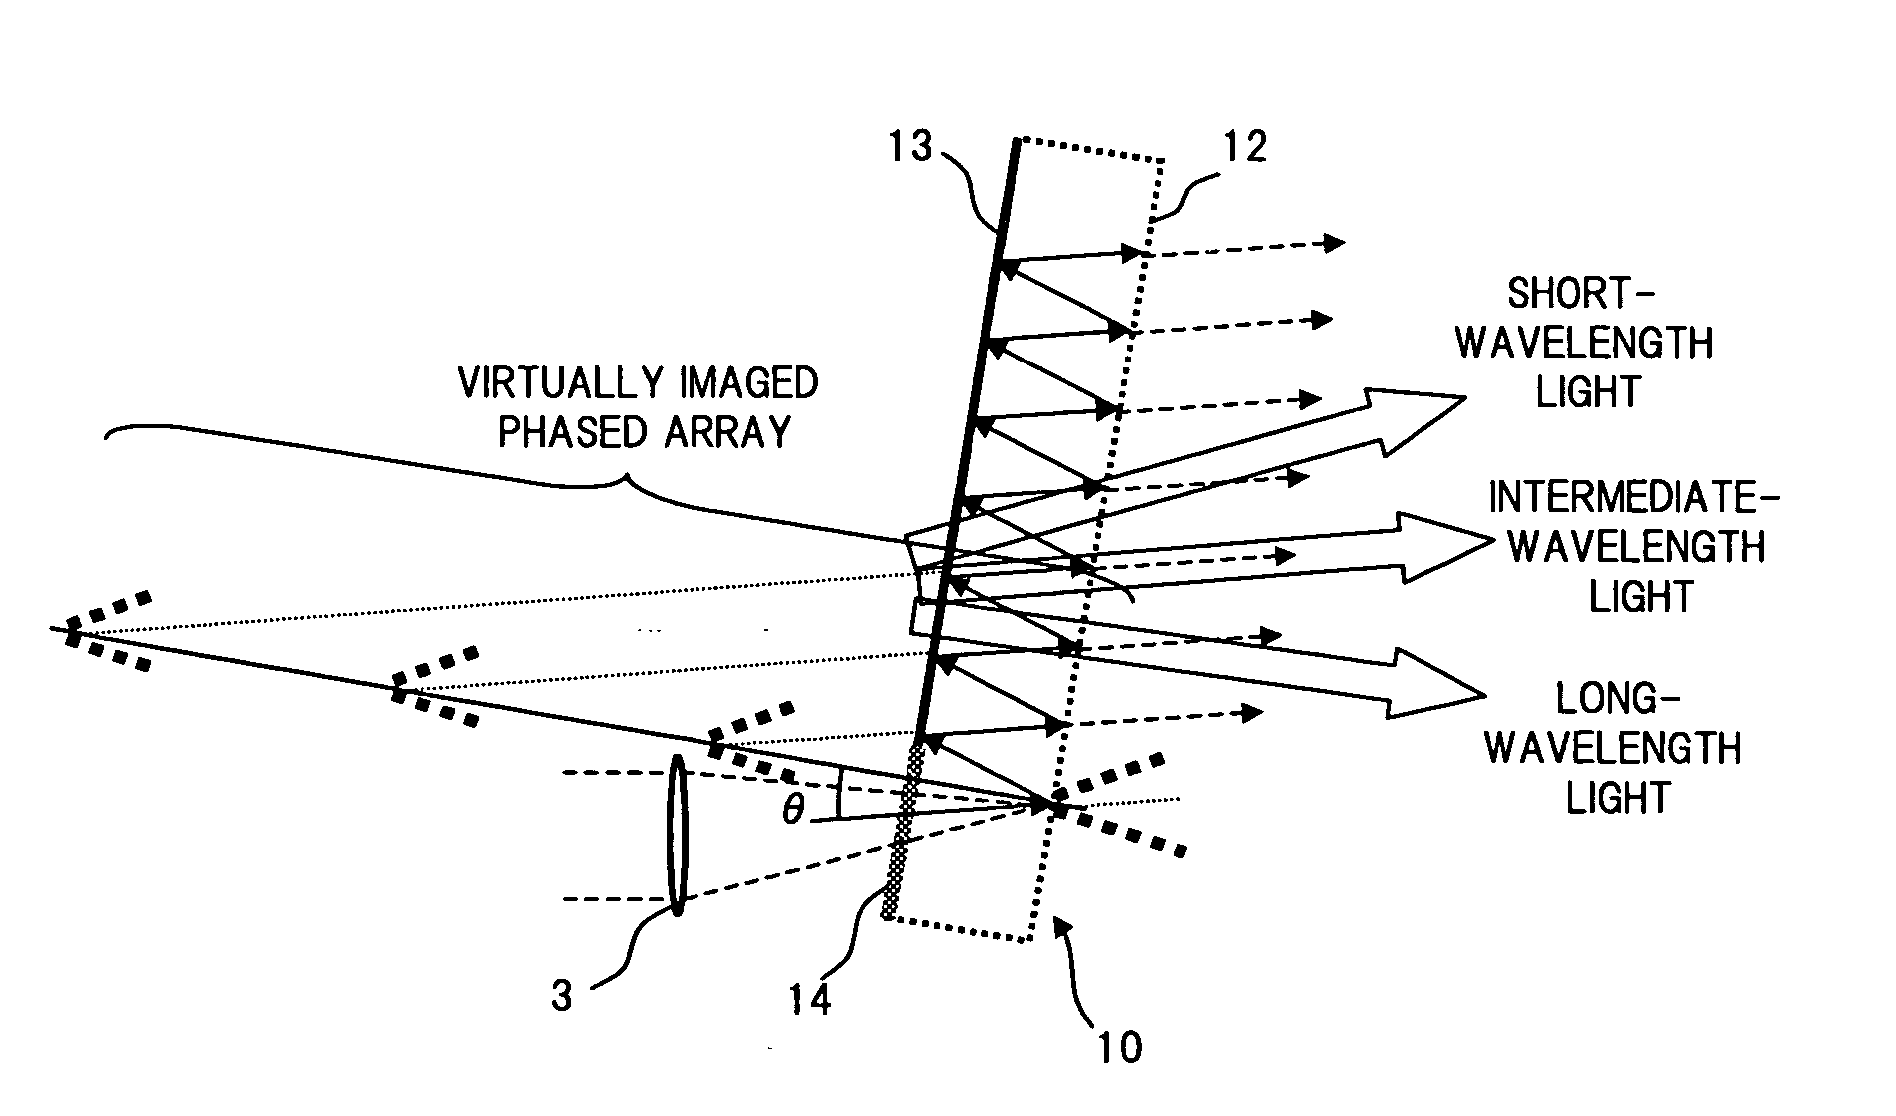 Wavelength dispersion compensating apparatus